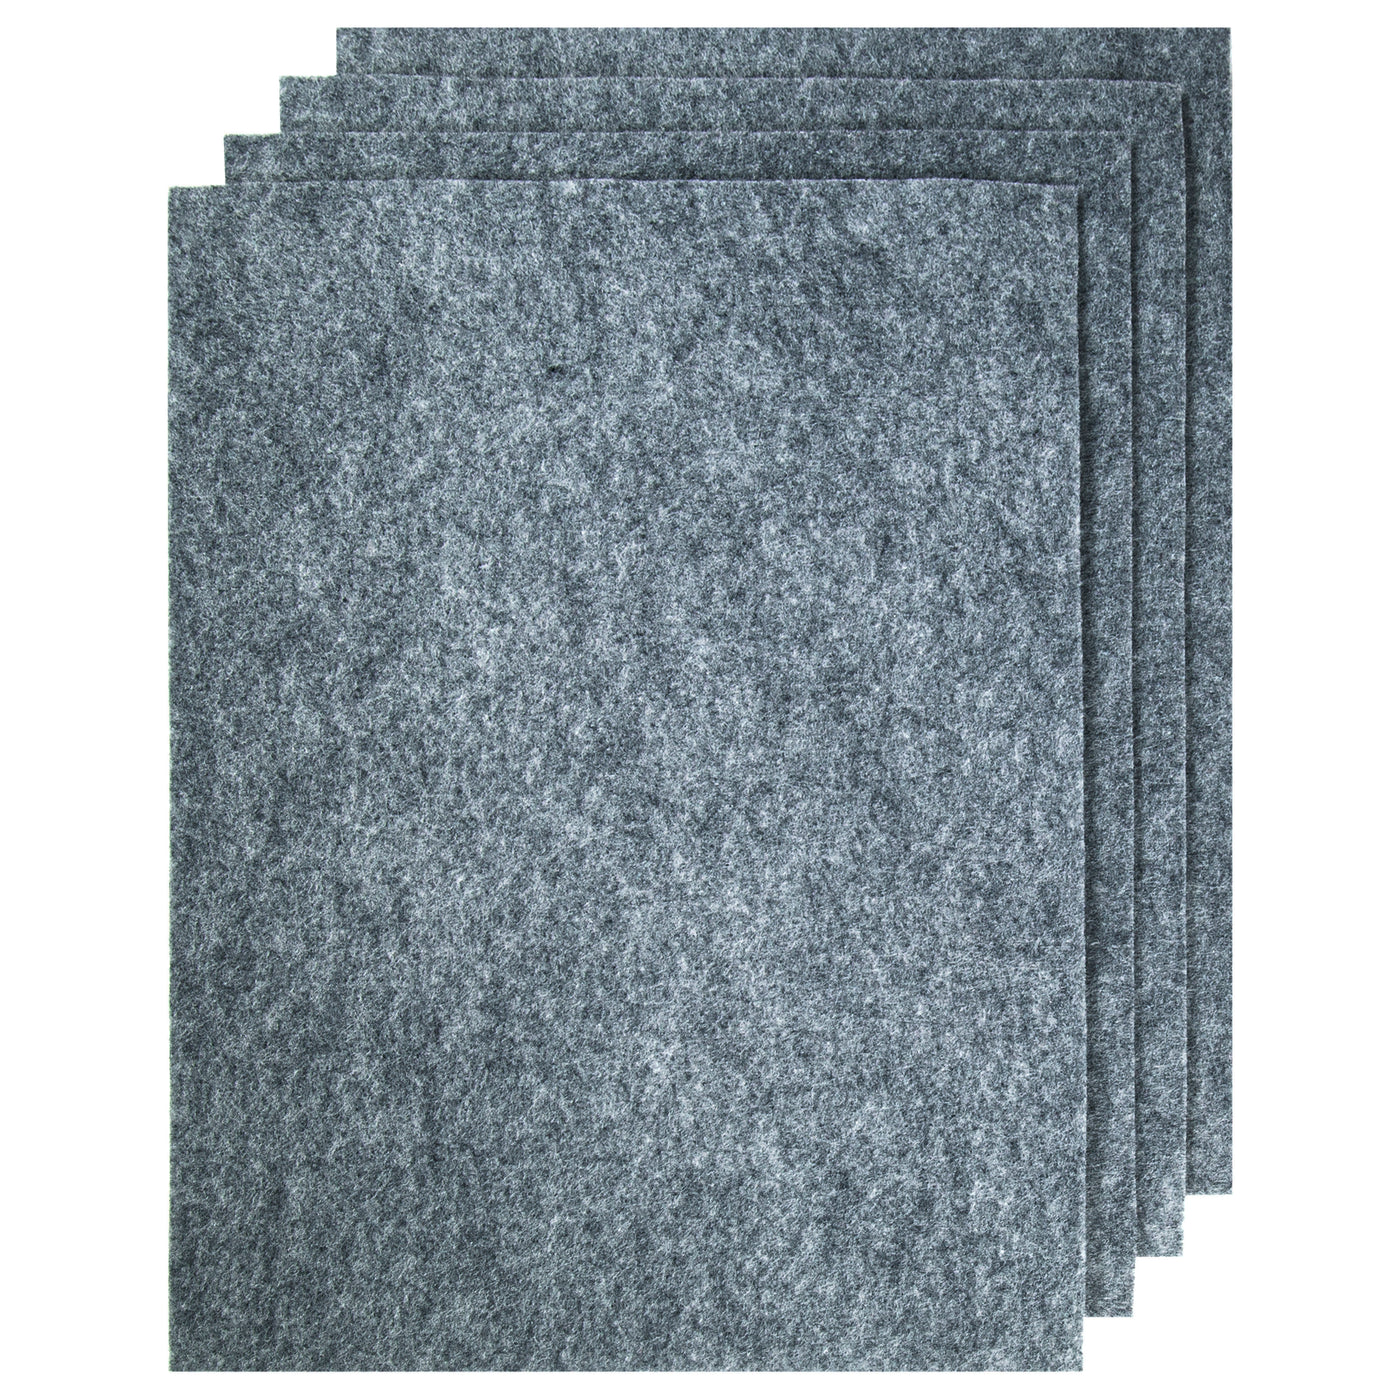 Acrylic Soft Felt Fabric Sheets Fiber Sheets White 39x39 Inch 2mm Thick 